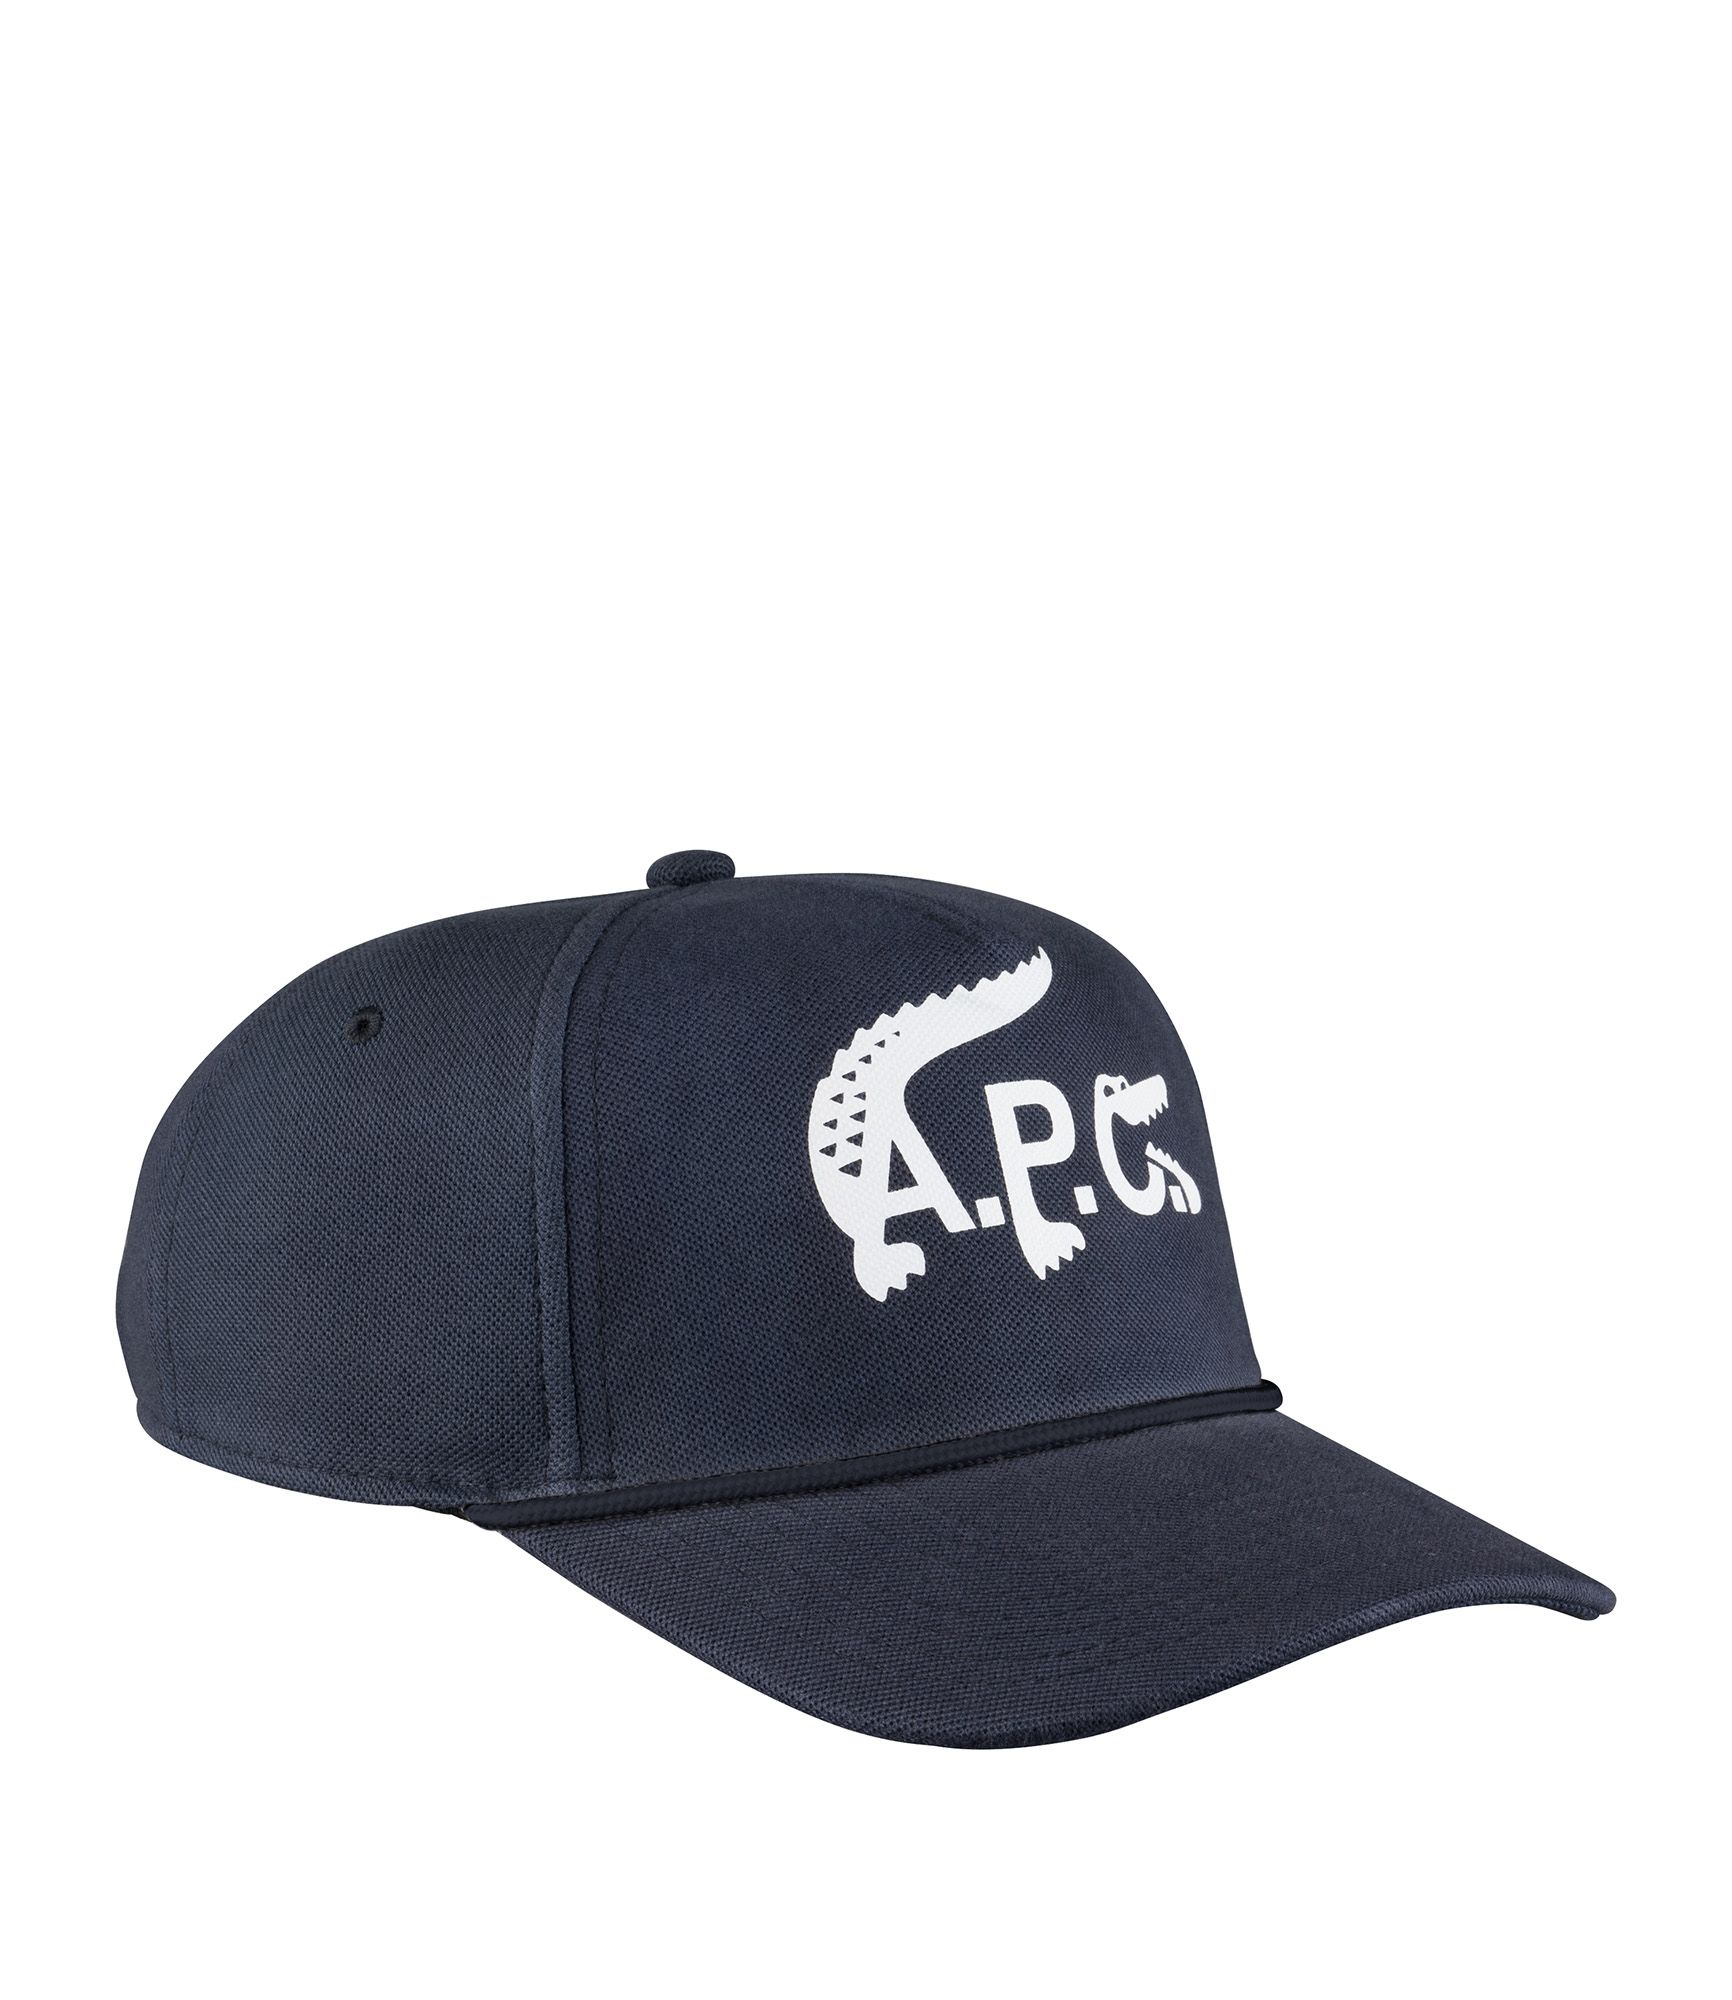 Navy blue baseball cap A.P.C. Lacoste